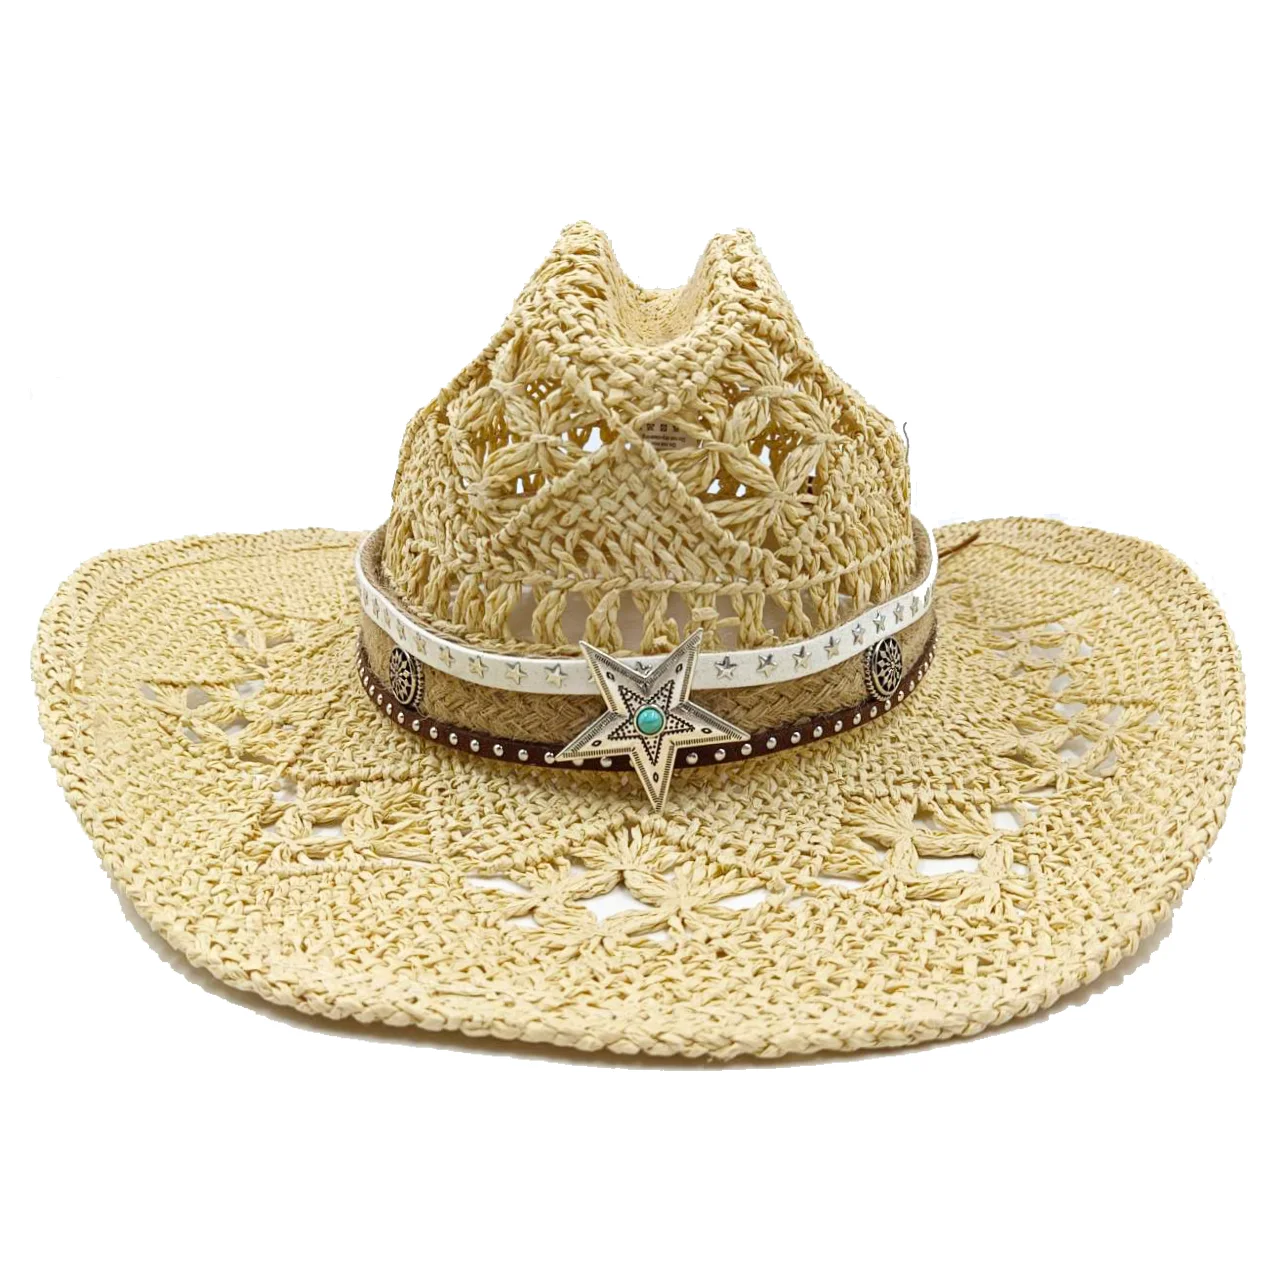  - Colorful double concave cowboy straw hat pentagram accessories men's summer outdoor travel beach hat Unisex western cowboy hat